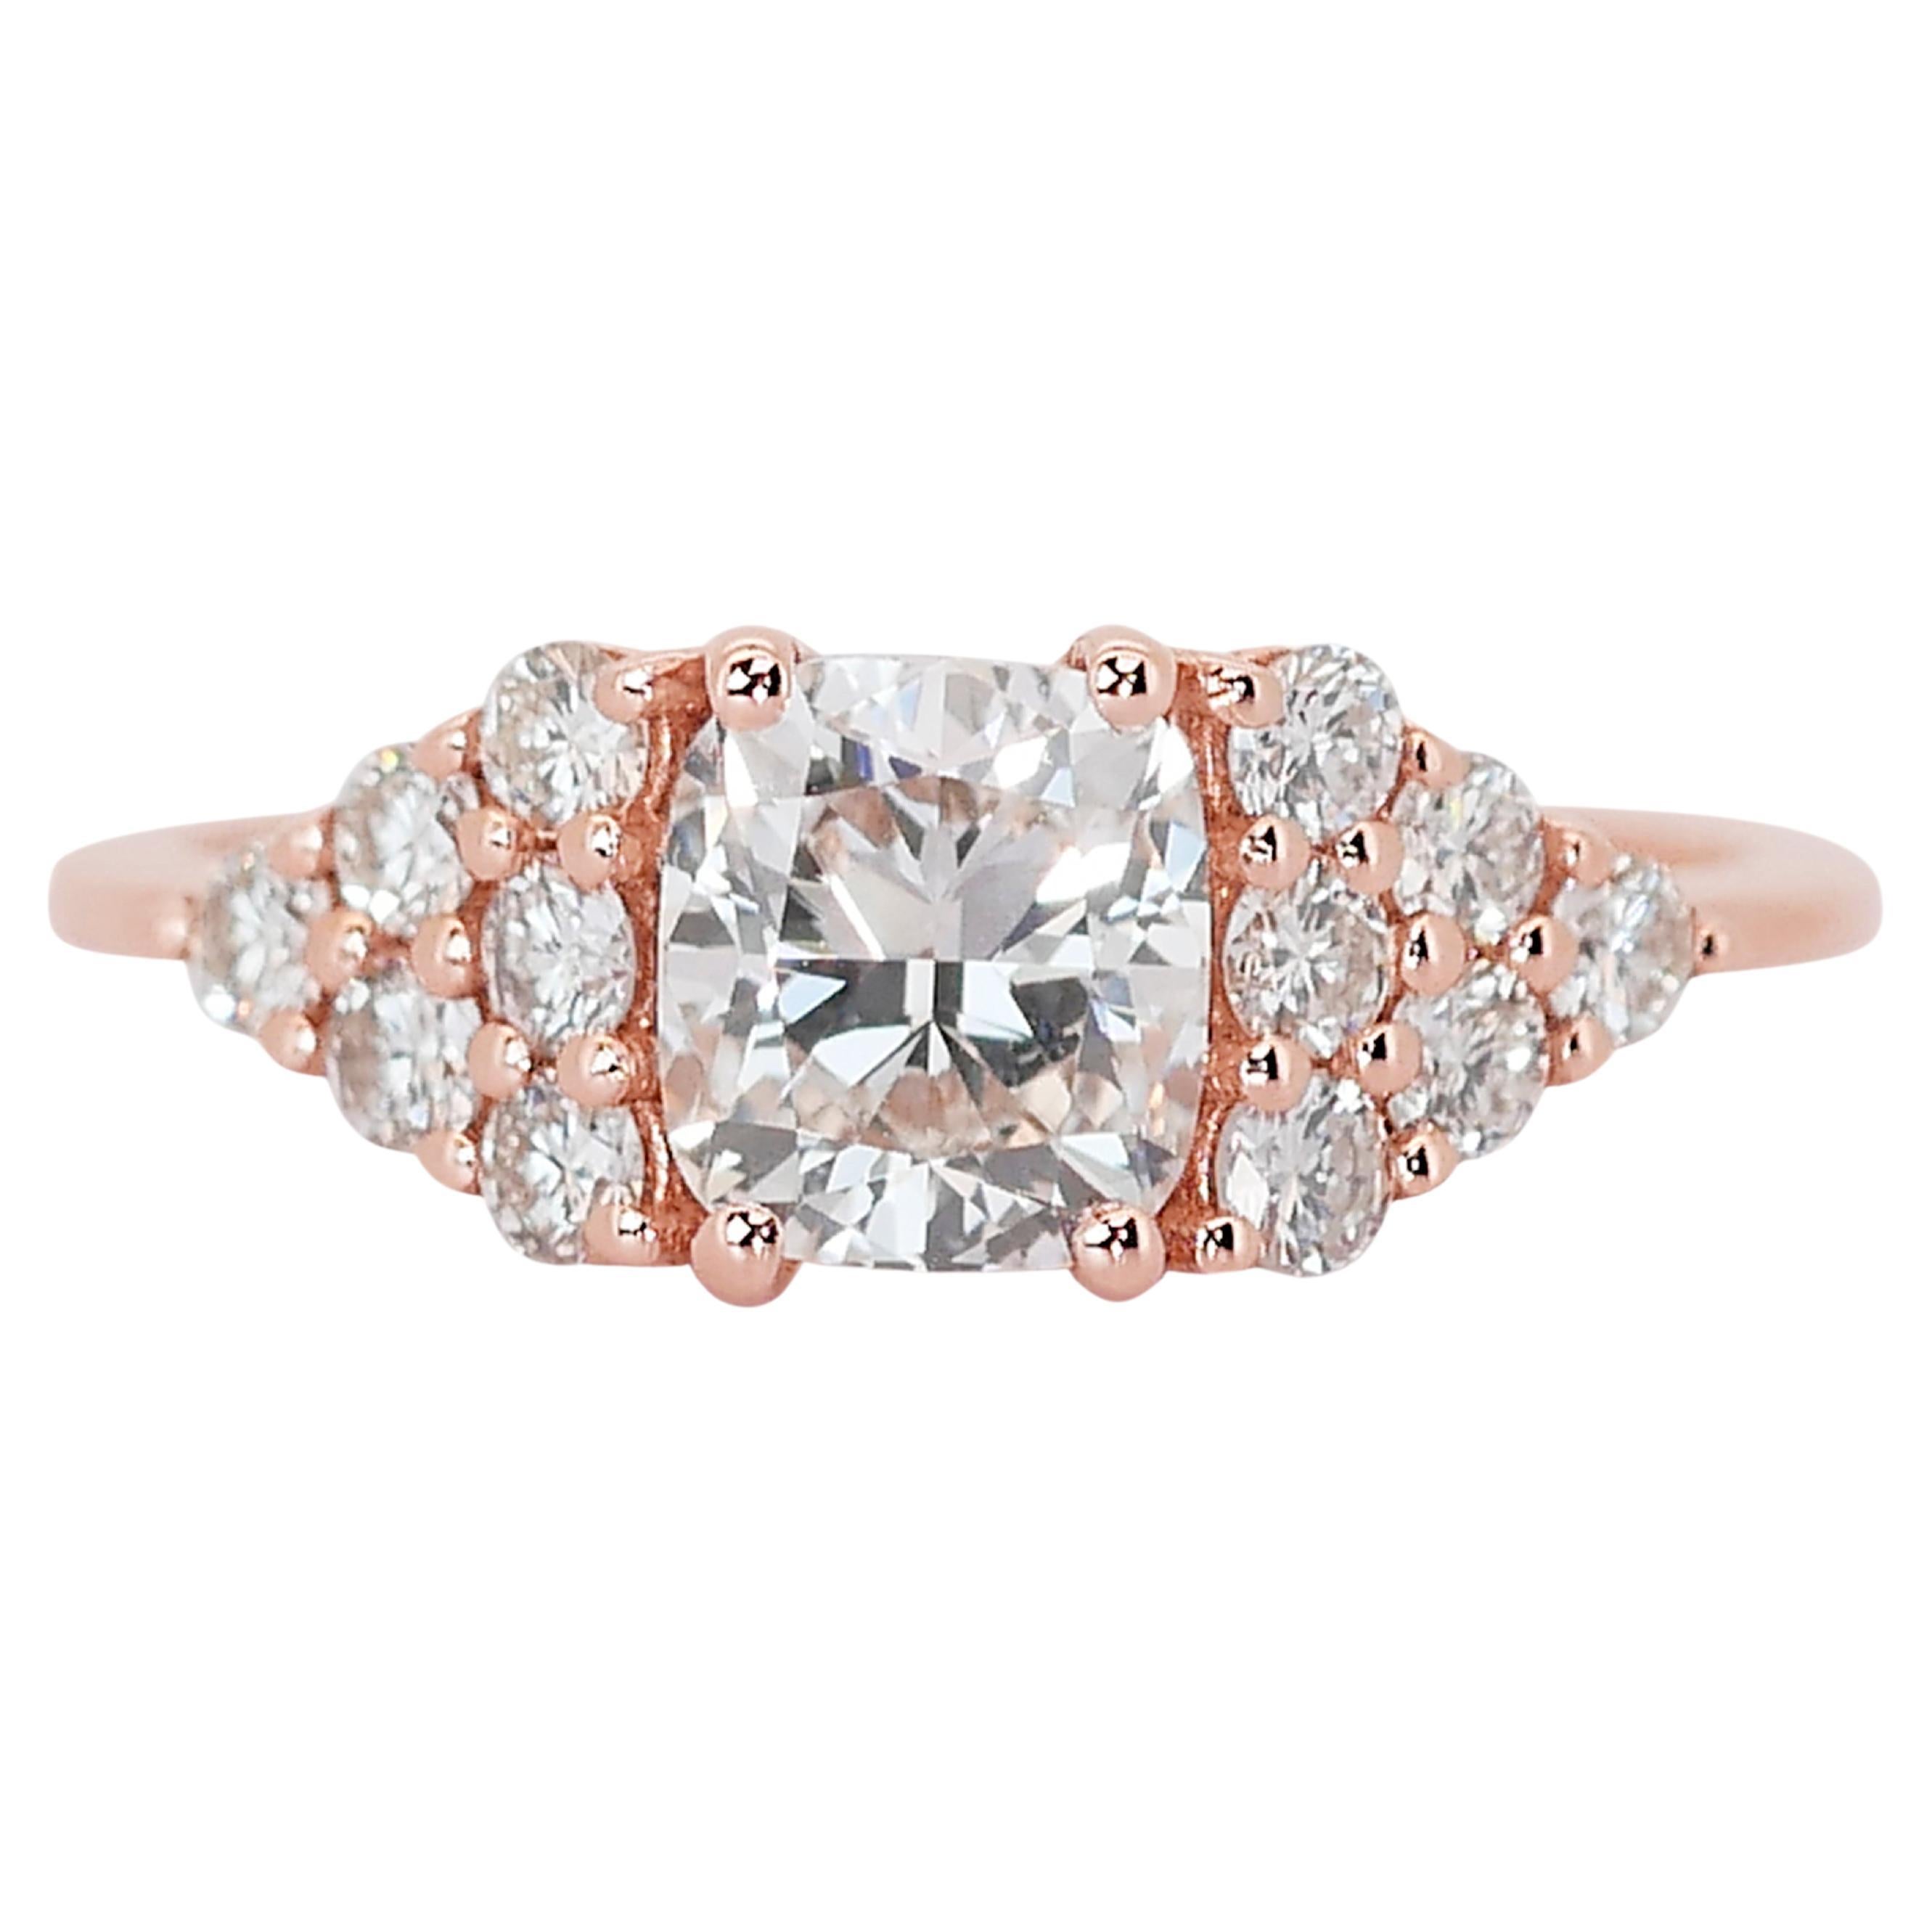 Lovely 1.65ct Diamonds Pave Ring in 14k Rose Gold - IGI Certified